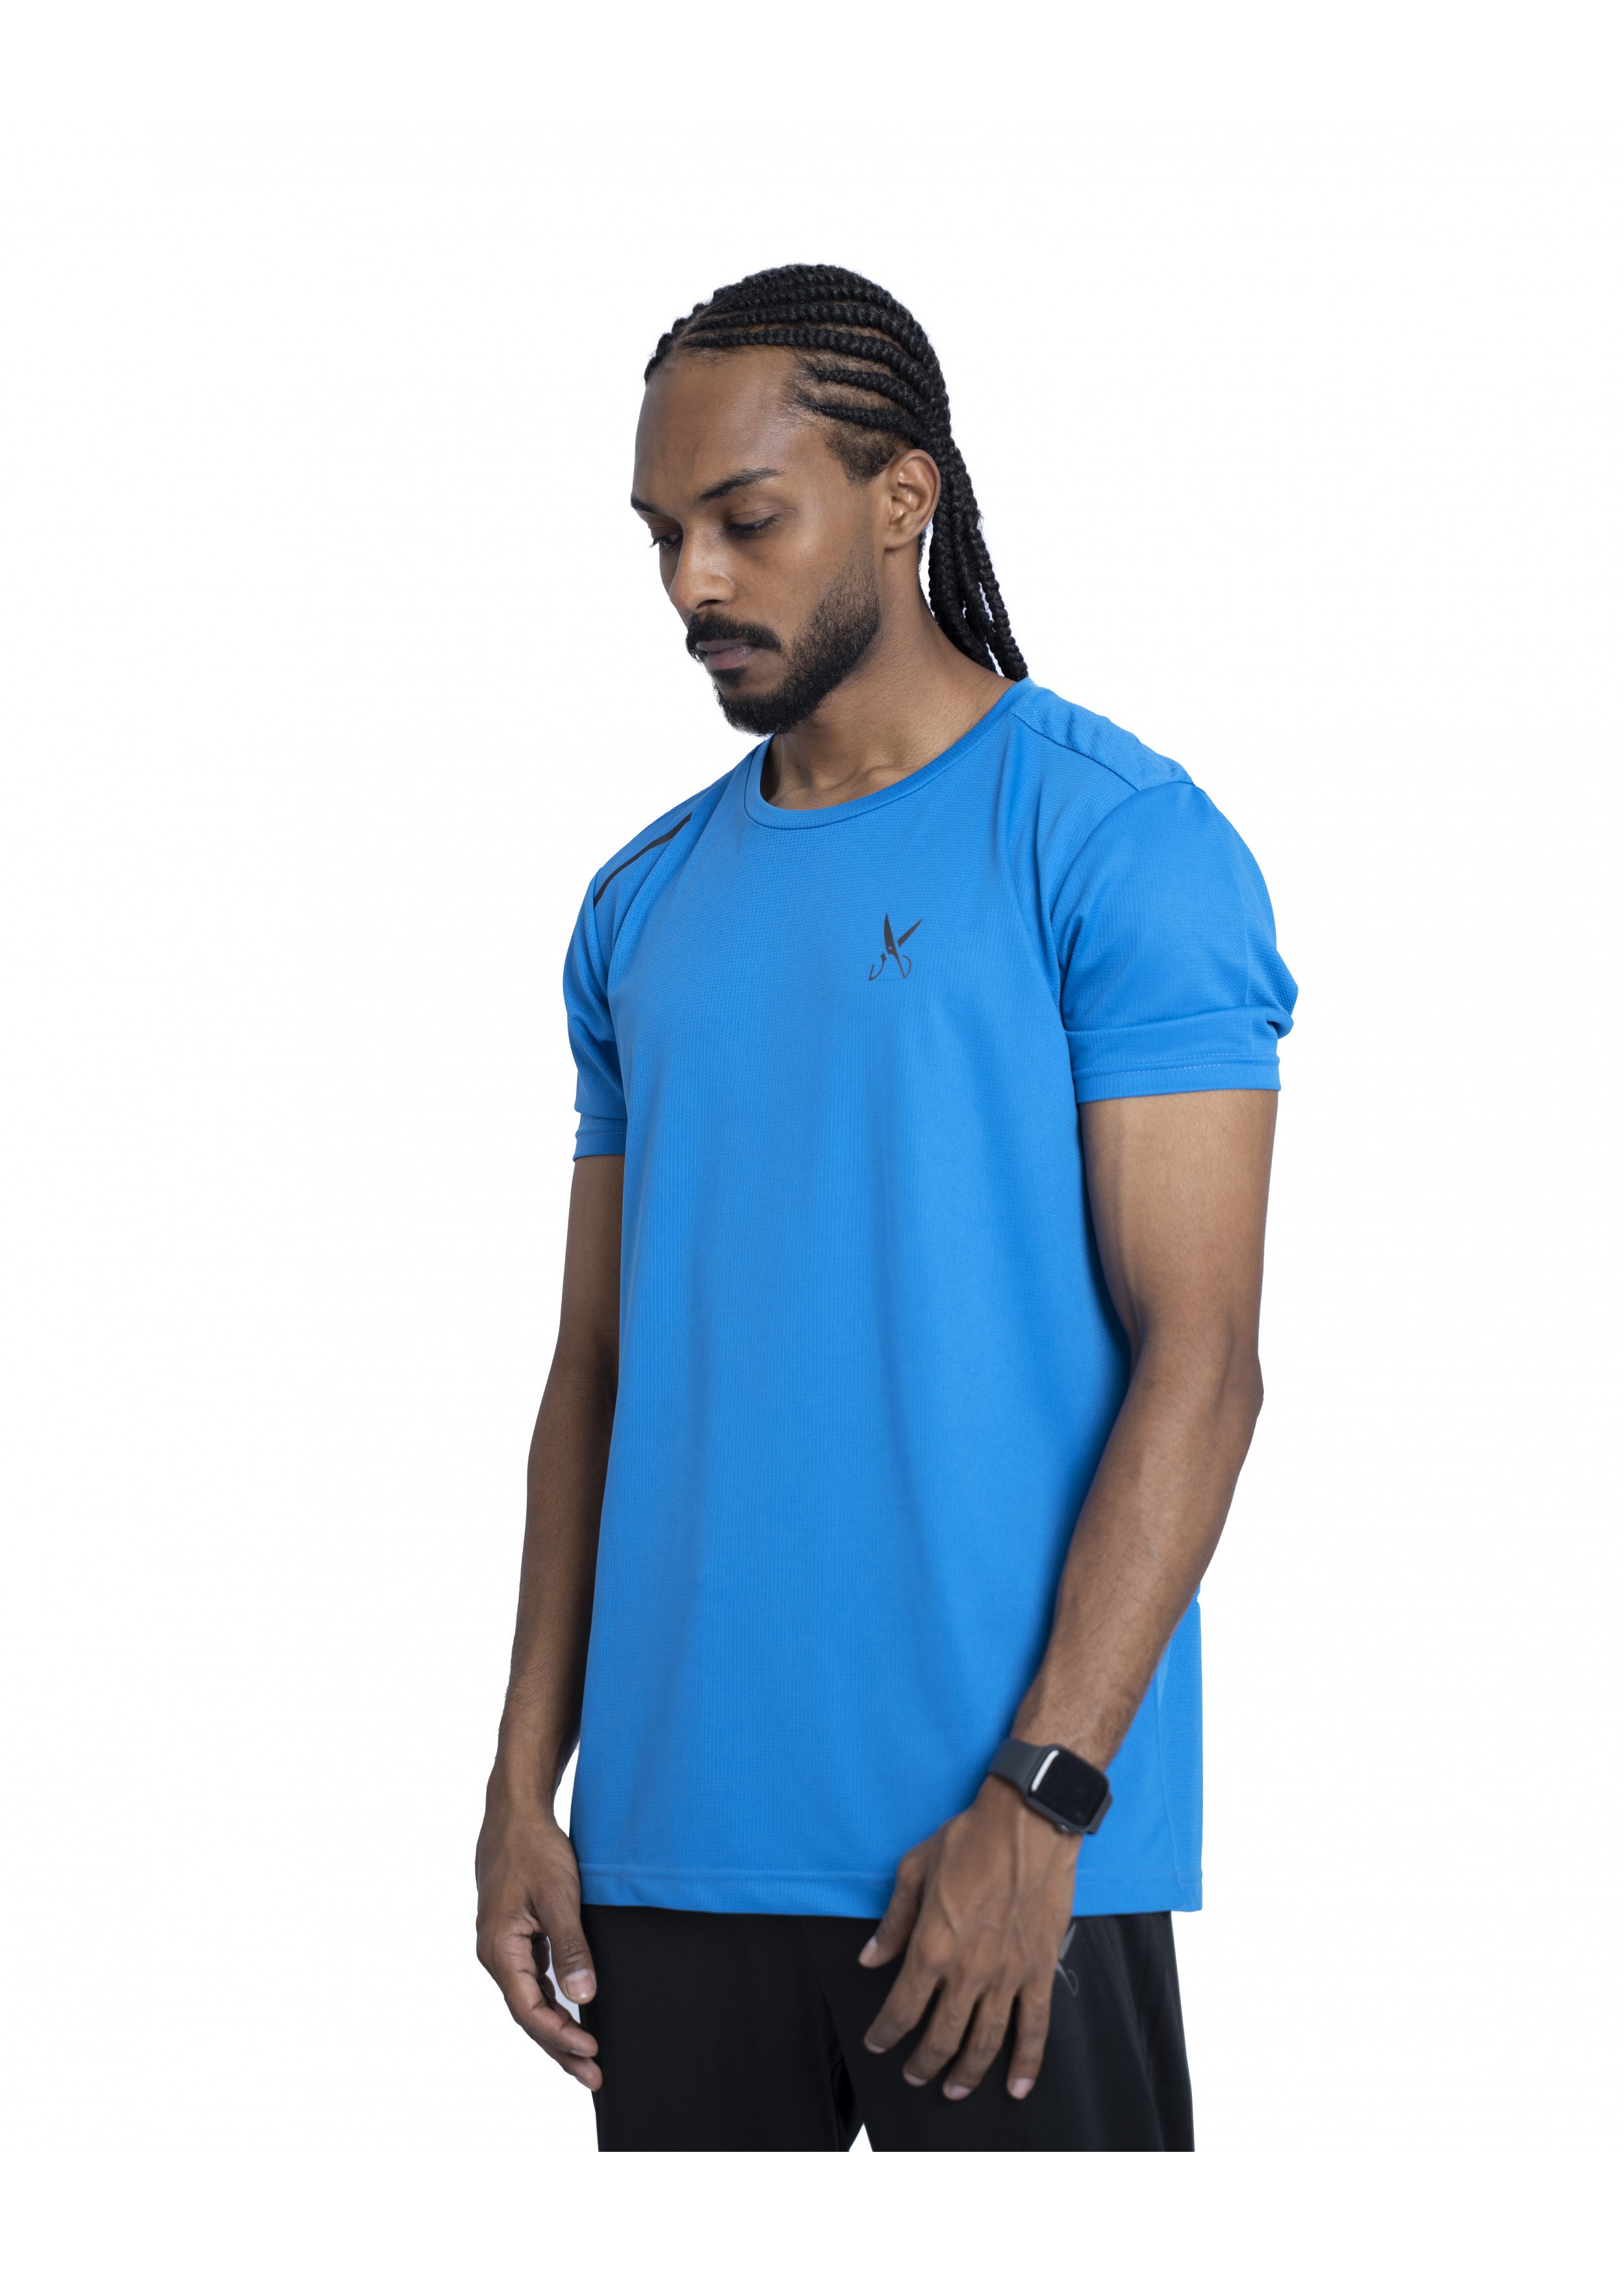 Men's sports t-shirt - Blue